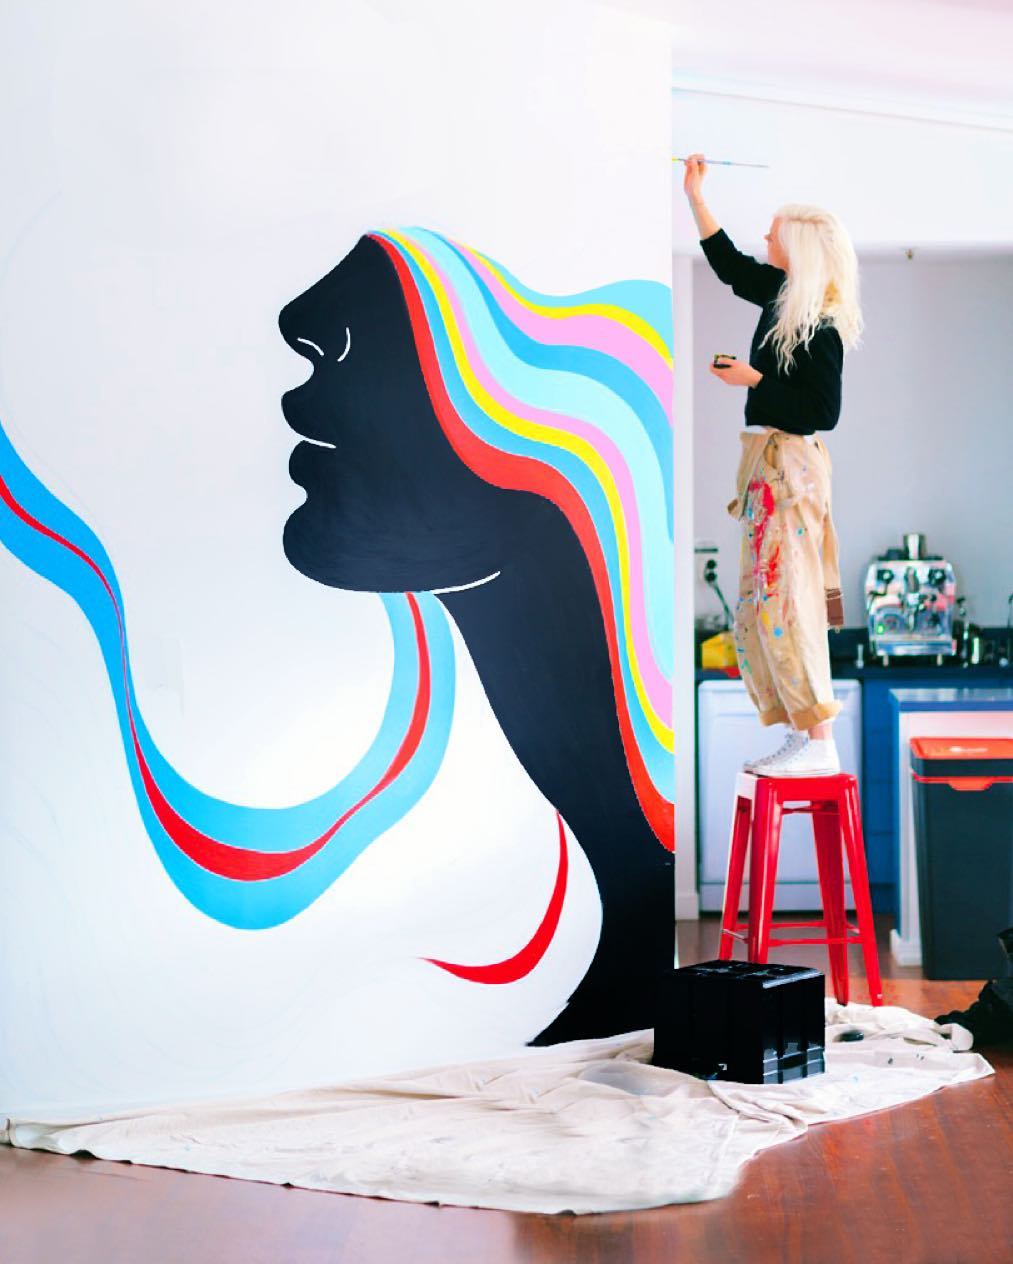 Gina Kiel peignant dans son studio